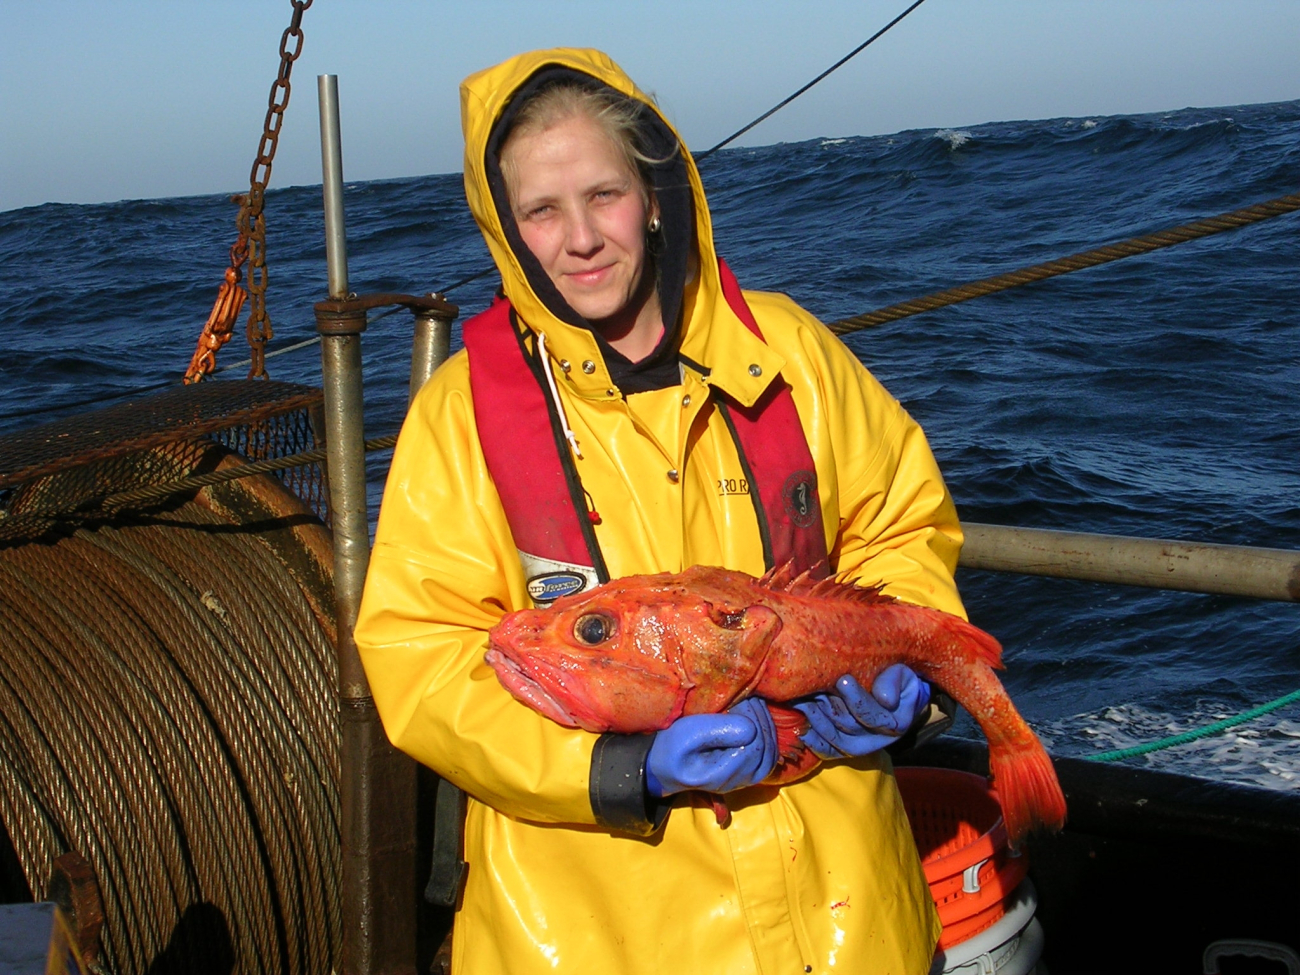 NOAA Fisheries employee Vanessa Tuttle poses with a largeShortspine thornyhead (Sebastolobus  alascanus) caught during ground fishtrawl survey aboard the F/V MS